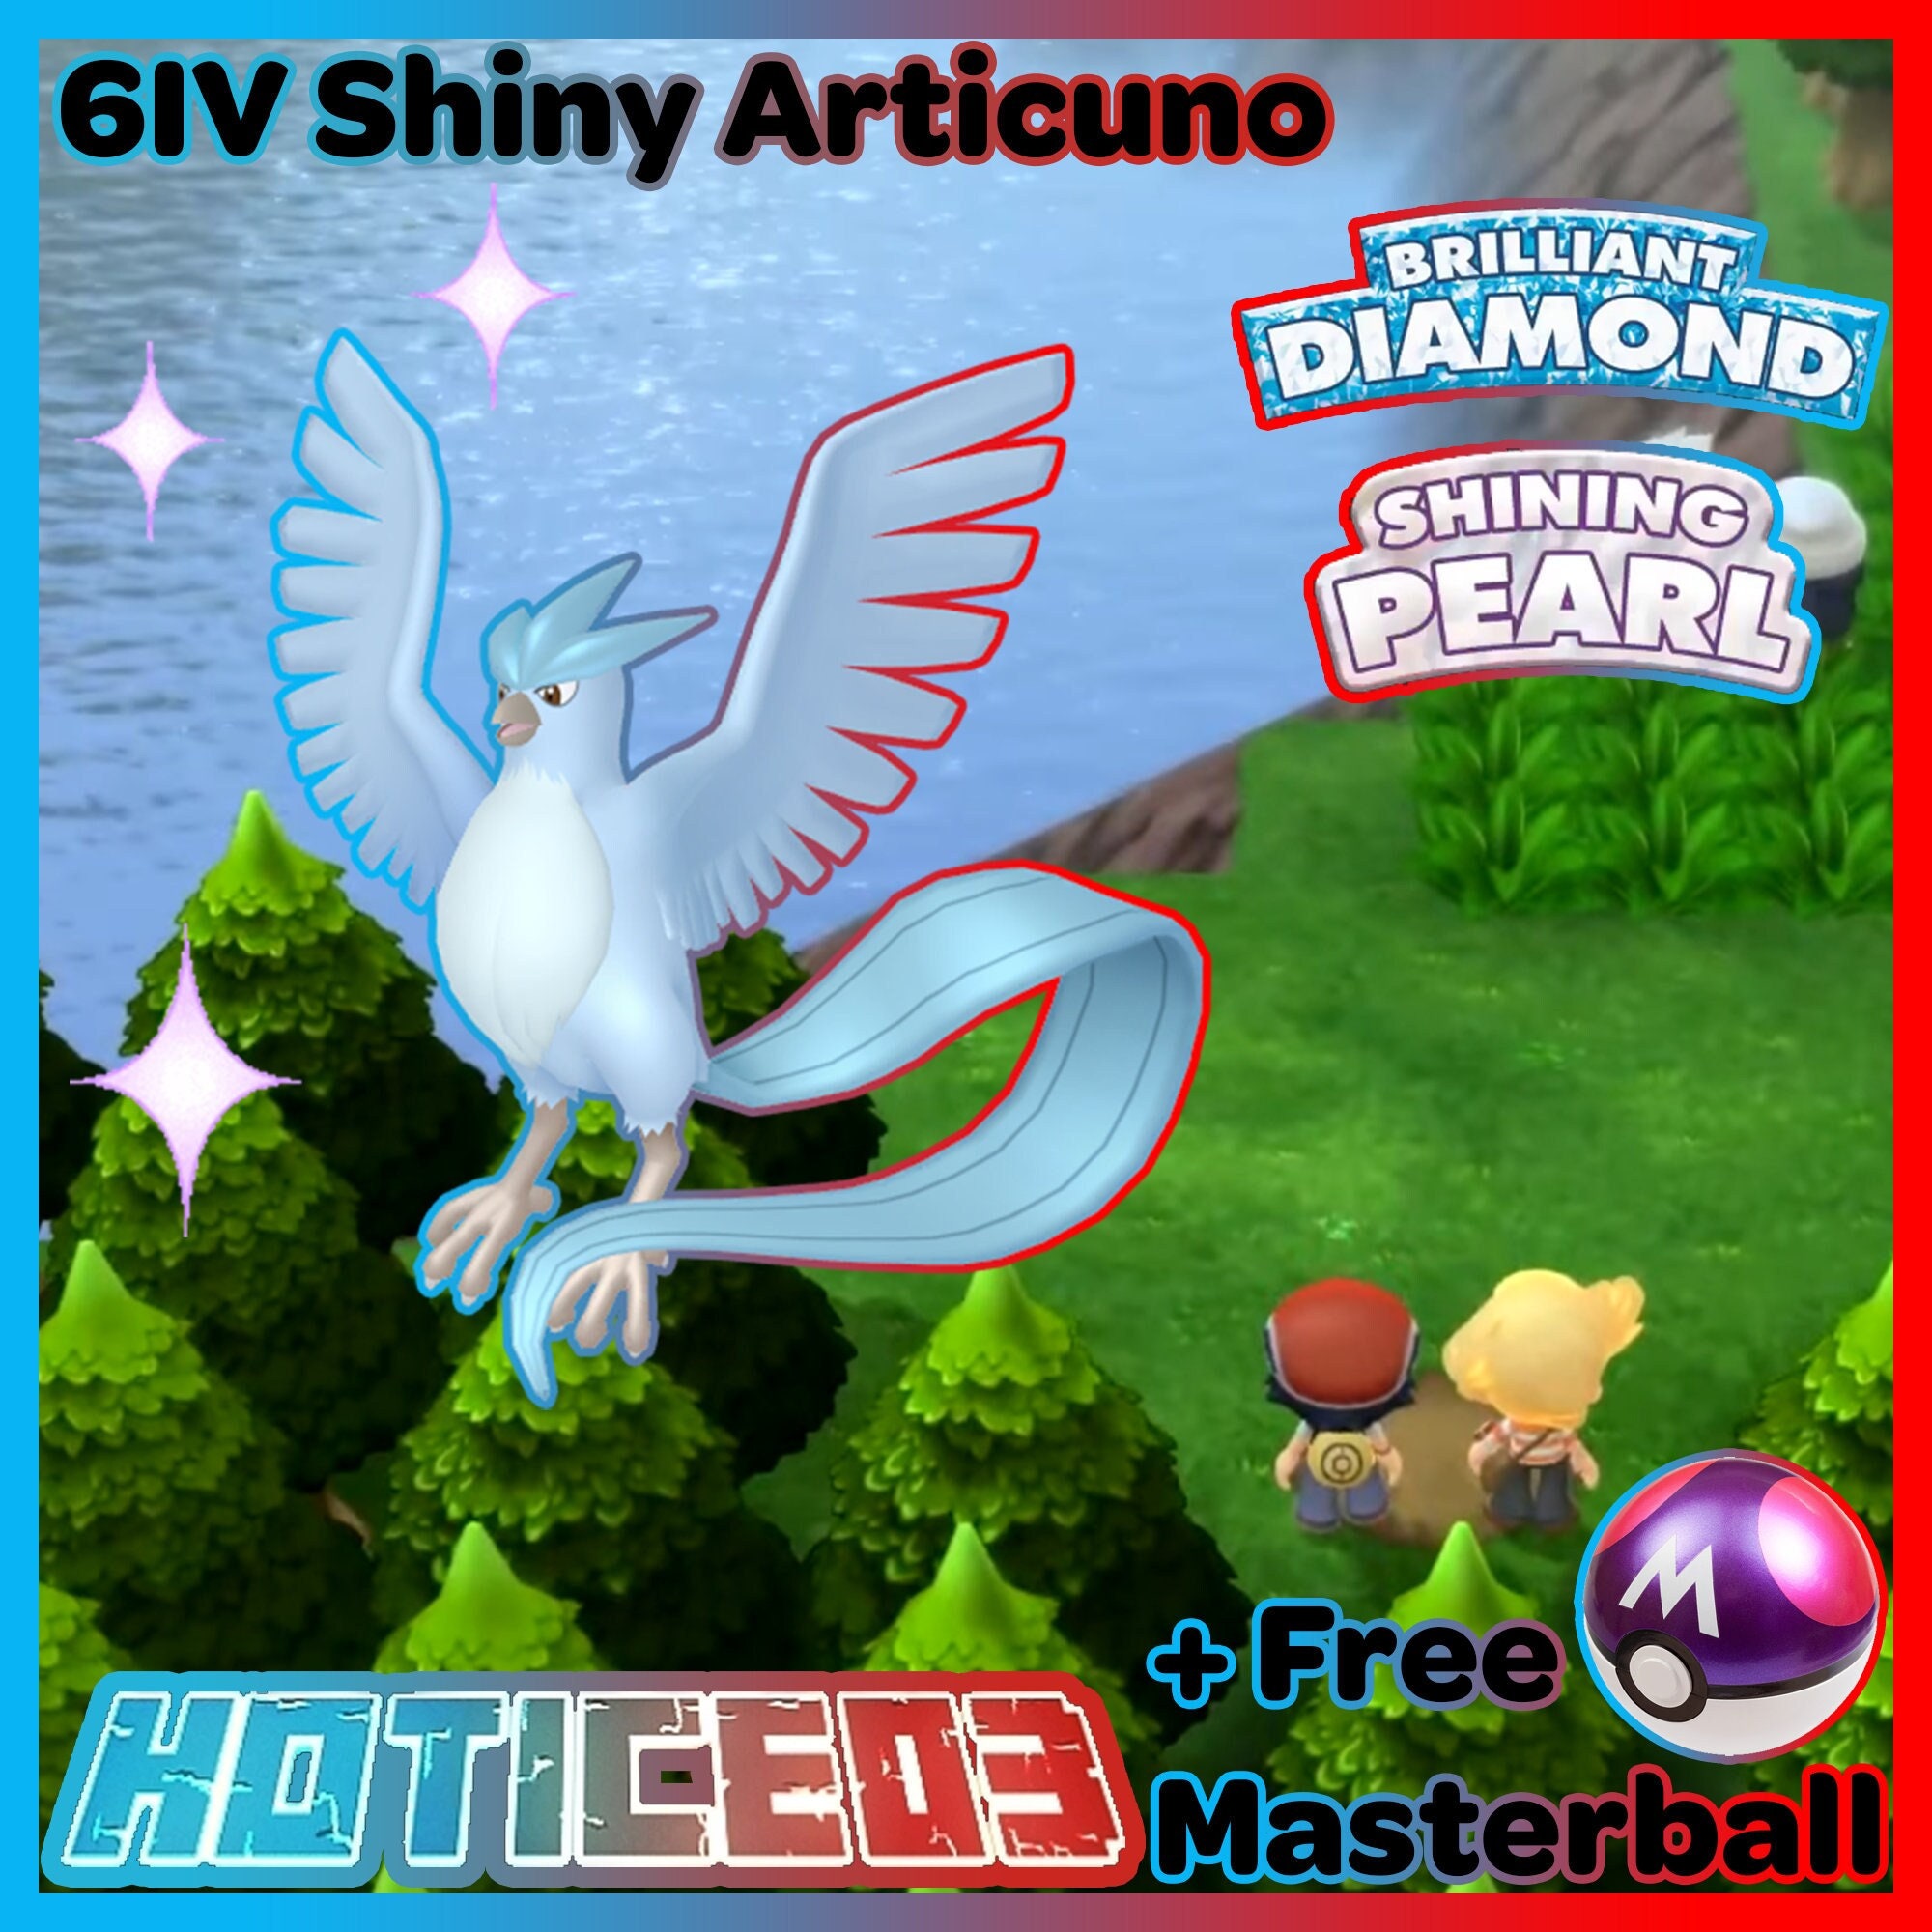 Pokémon Brilliant Diamond e Shining Pearl - Como obter Articuno